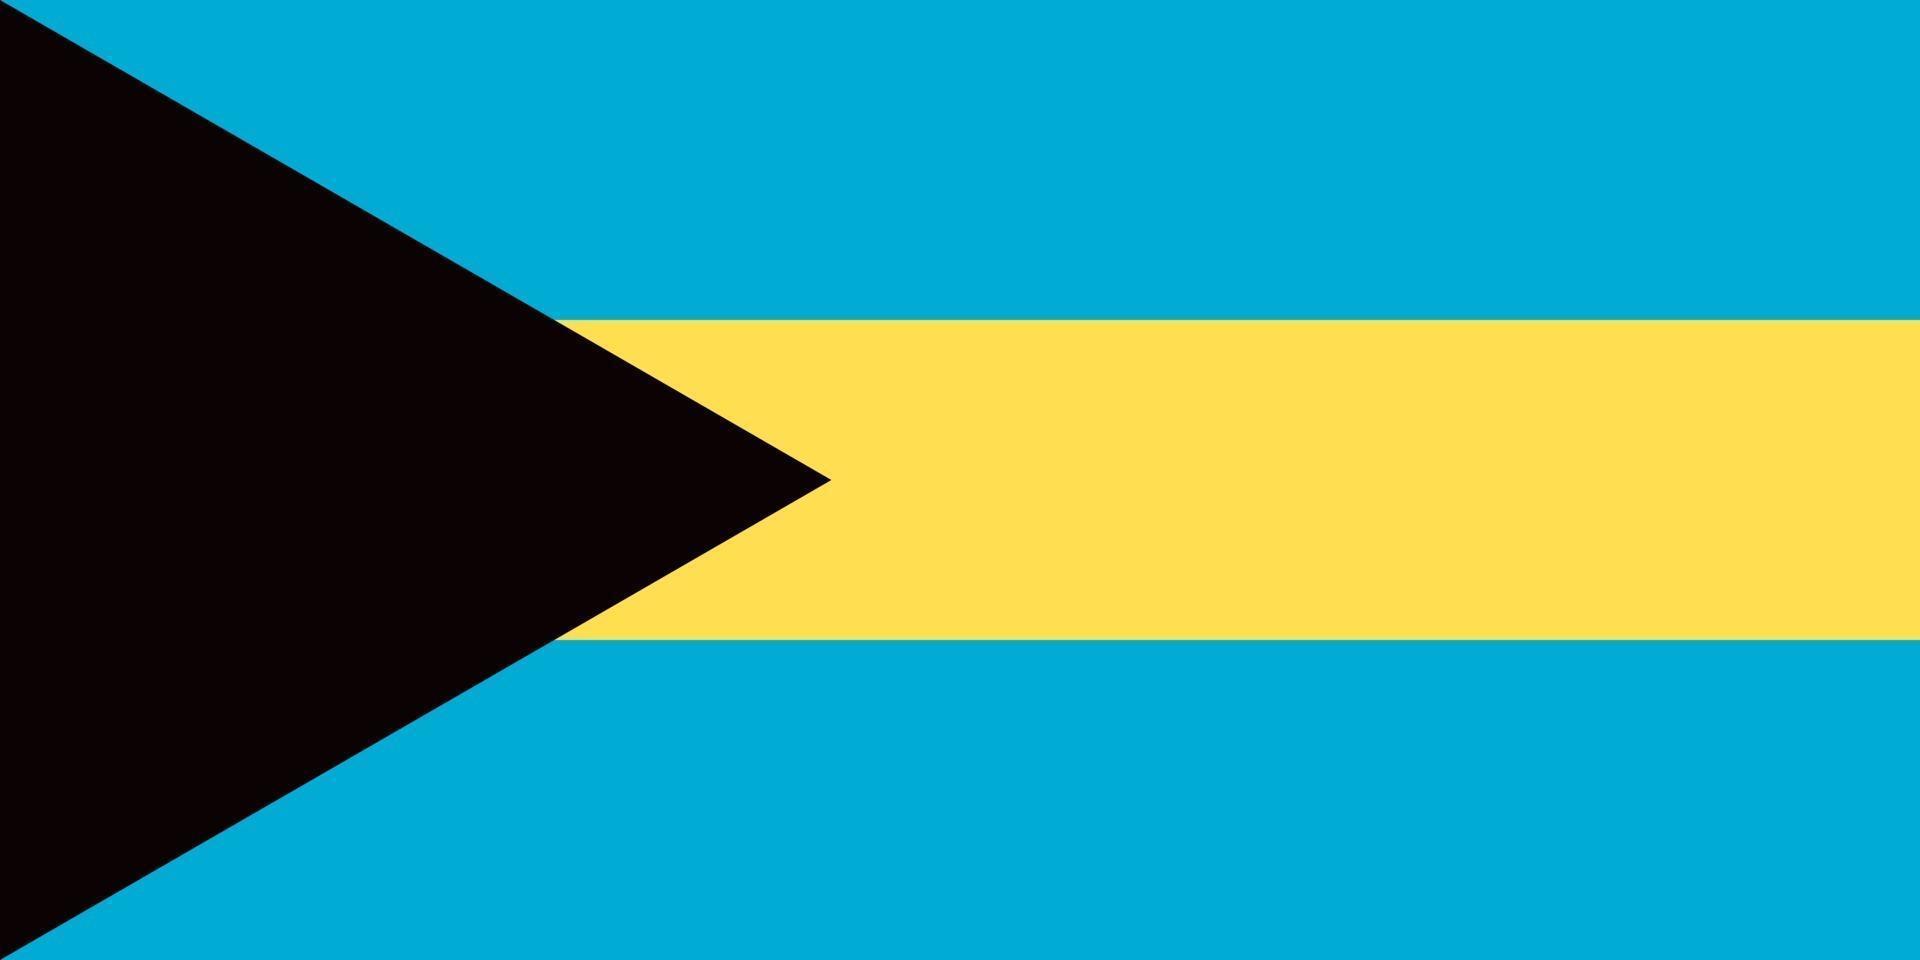 Bahamas ufficialmente bandiera officially vettore